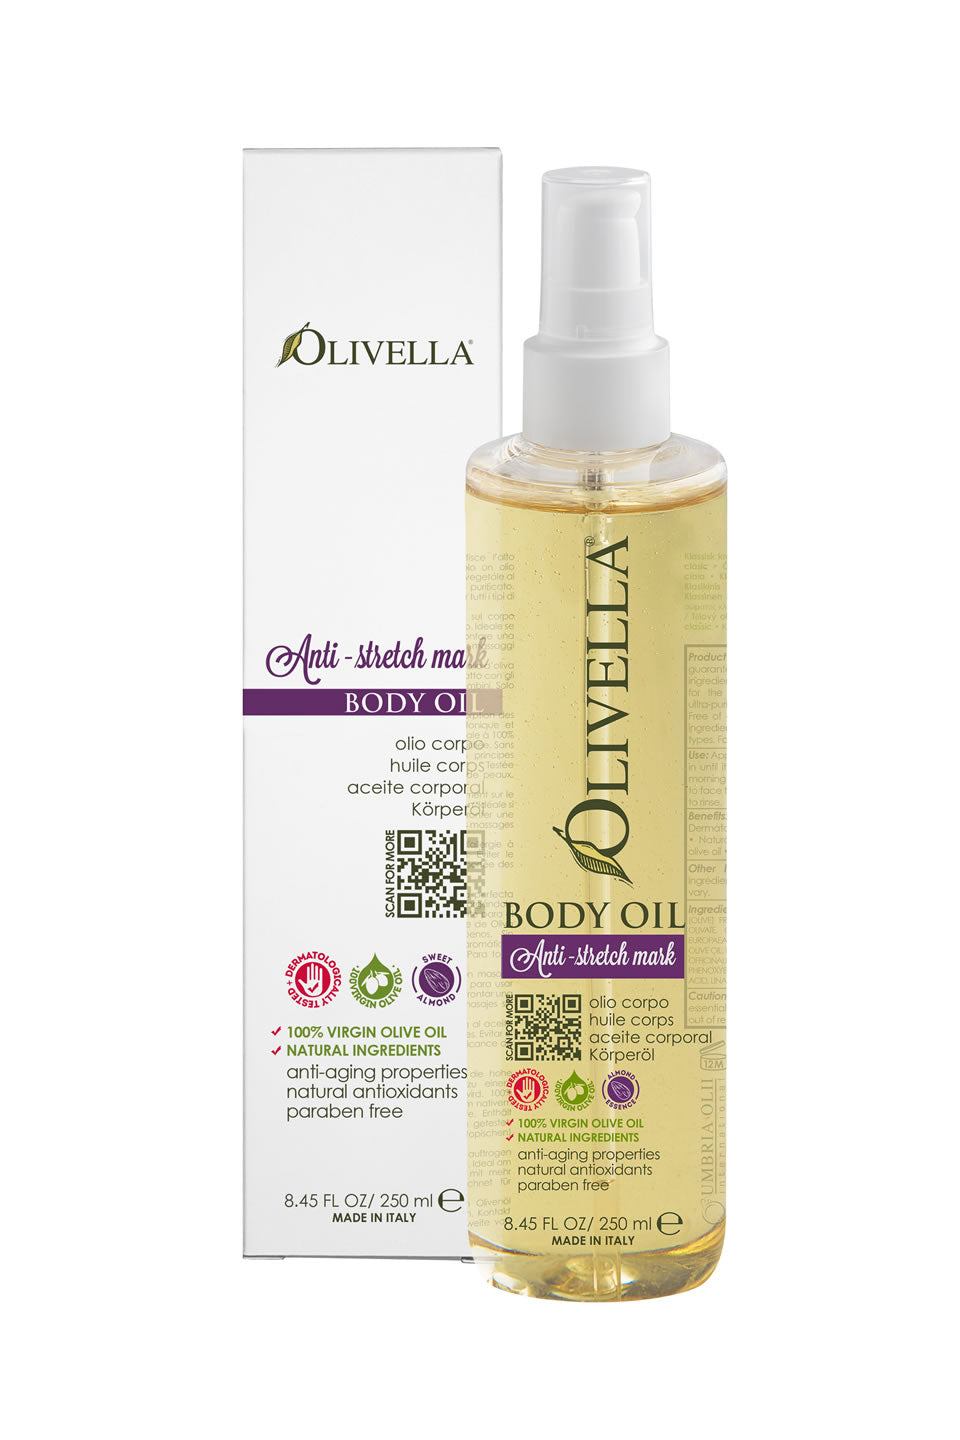 Olivella Body Oil - Anti-Stretch Mark 8.45 Oz - Olivella